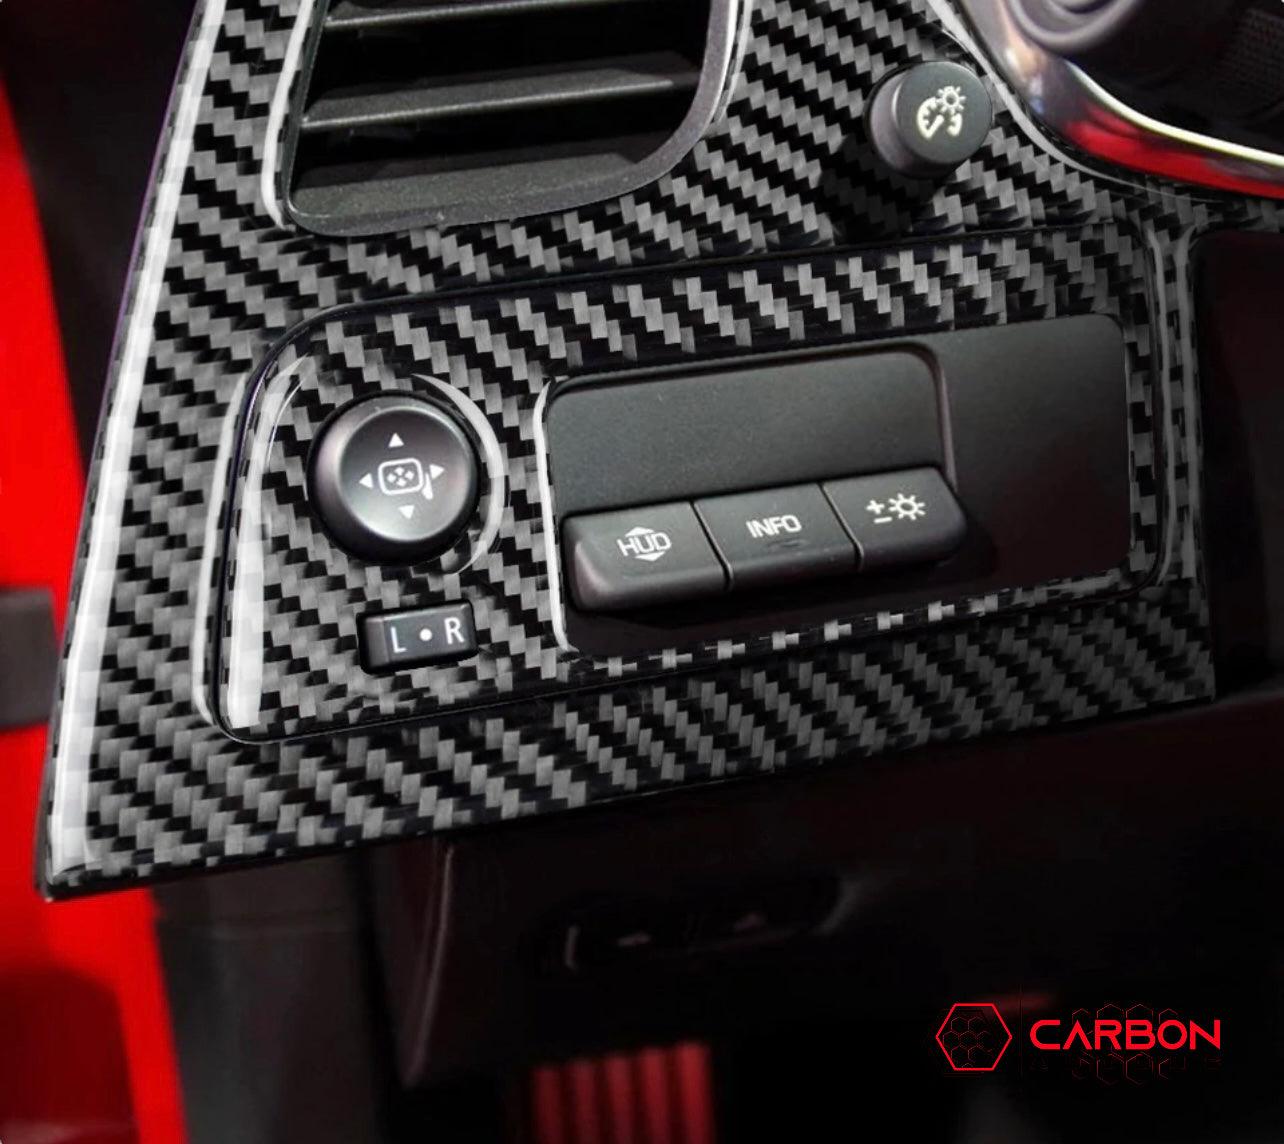 C7 Corvette 2014-2019 Driver Side Dashboard Carbon Fiber Overlay - carbonaddons Carbon Fiber Parts, Accessories, Upgrades, Mods